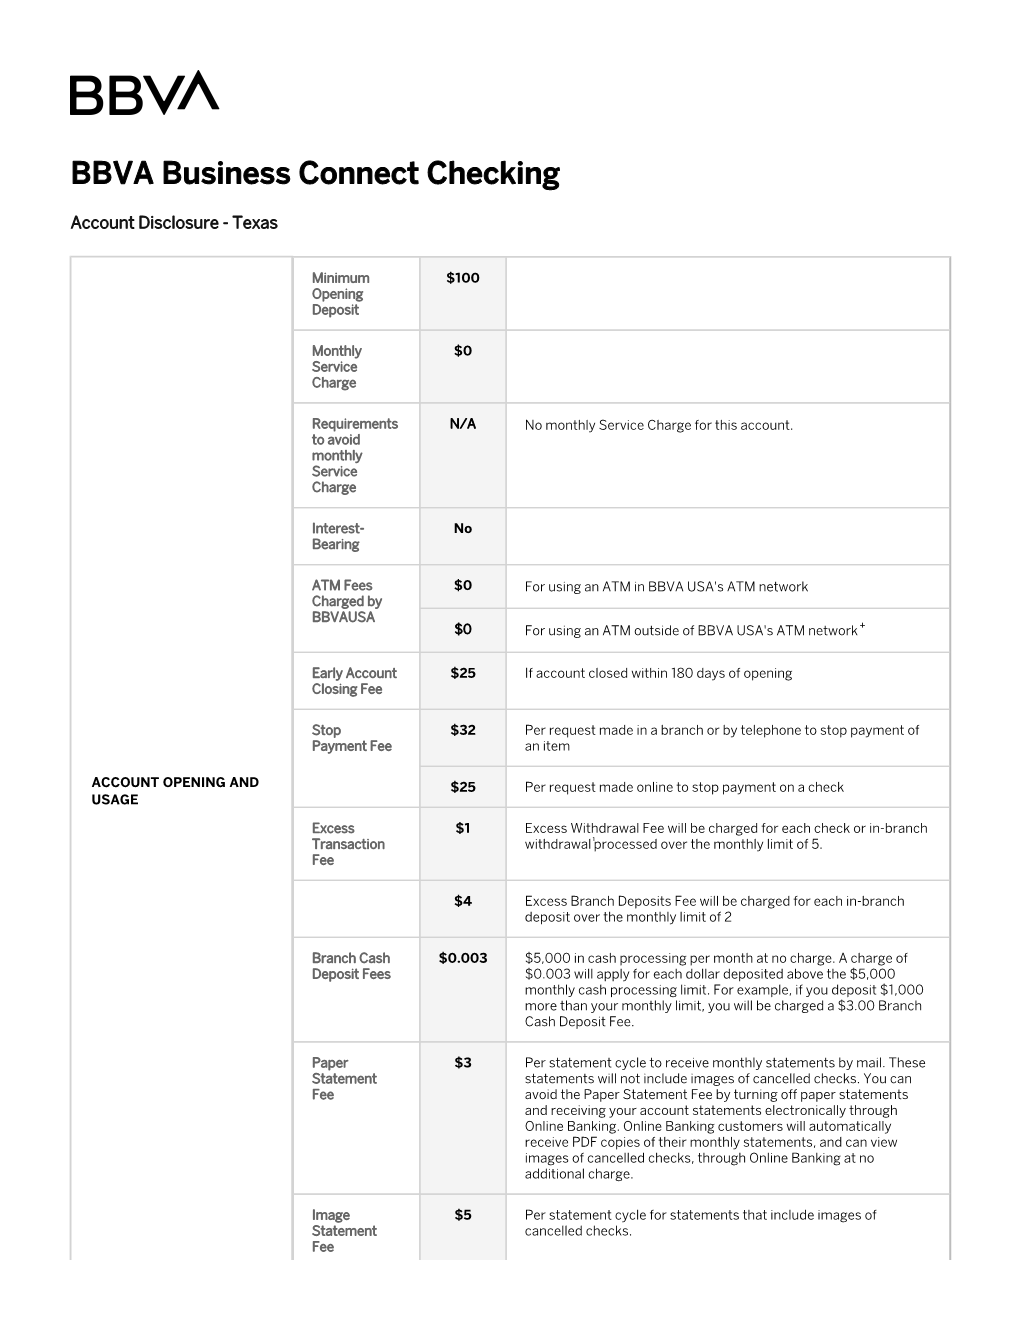 BBVA Business Connect Checking Account Disclosure | Texas | BBVA